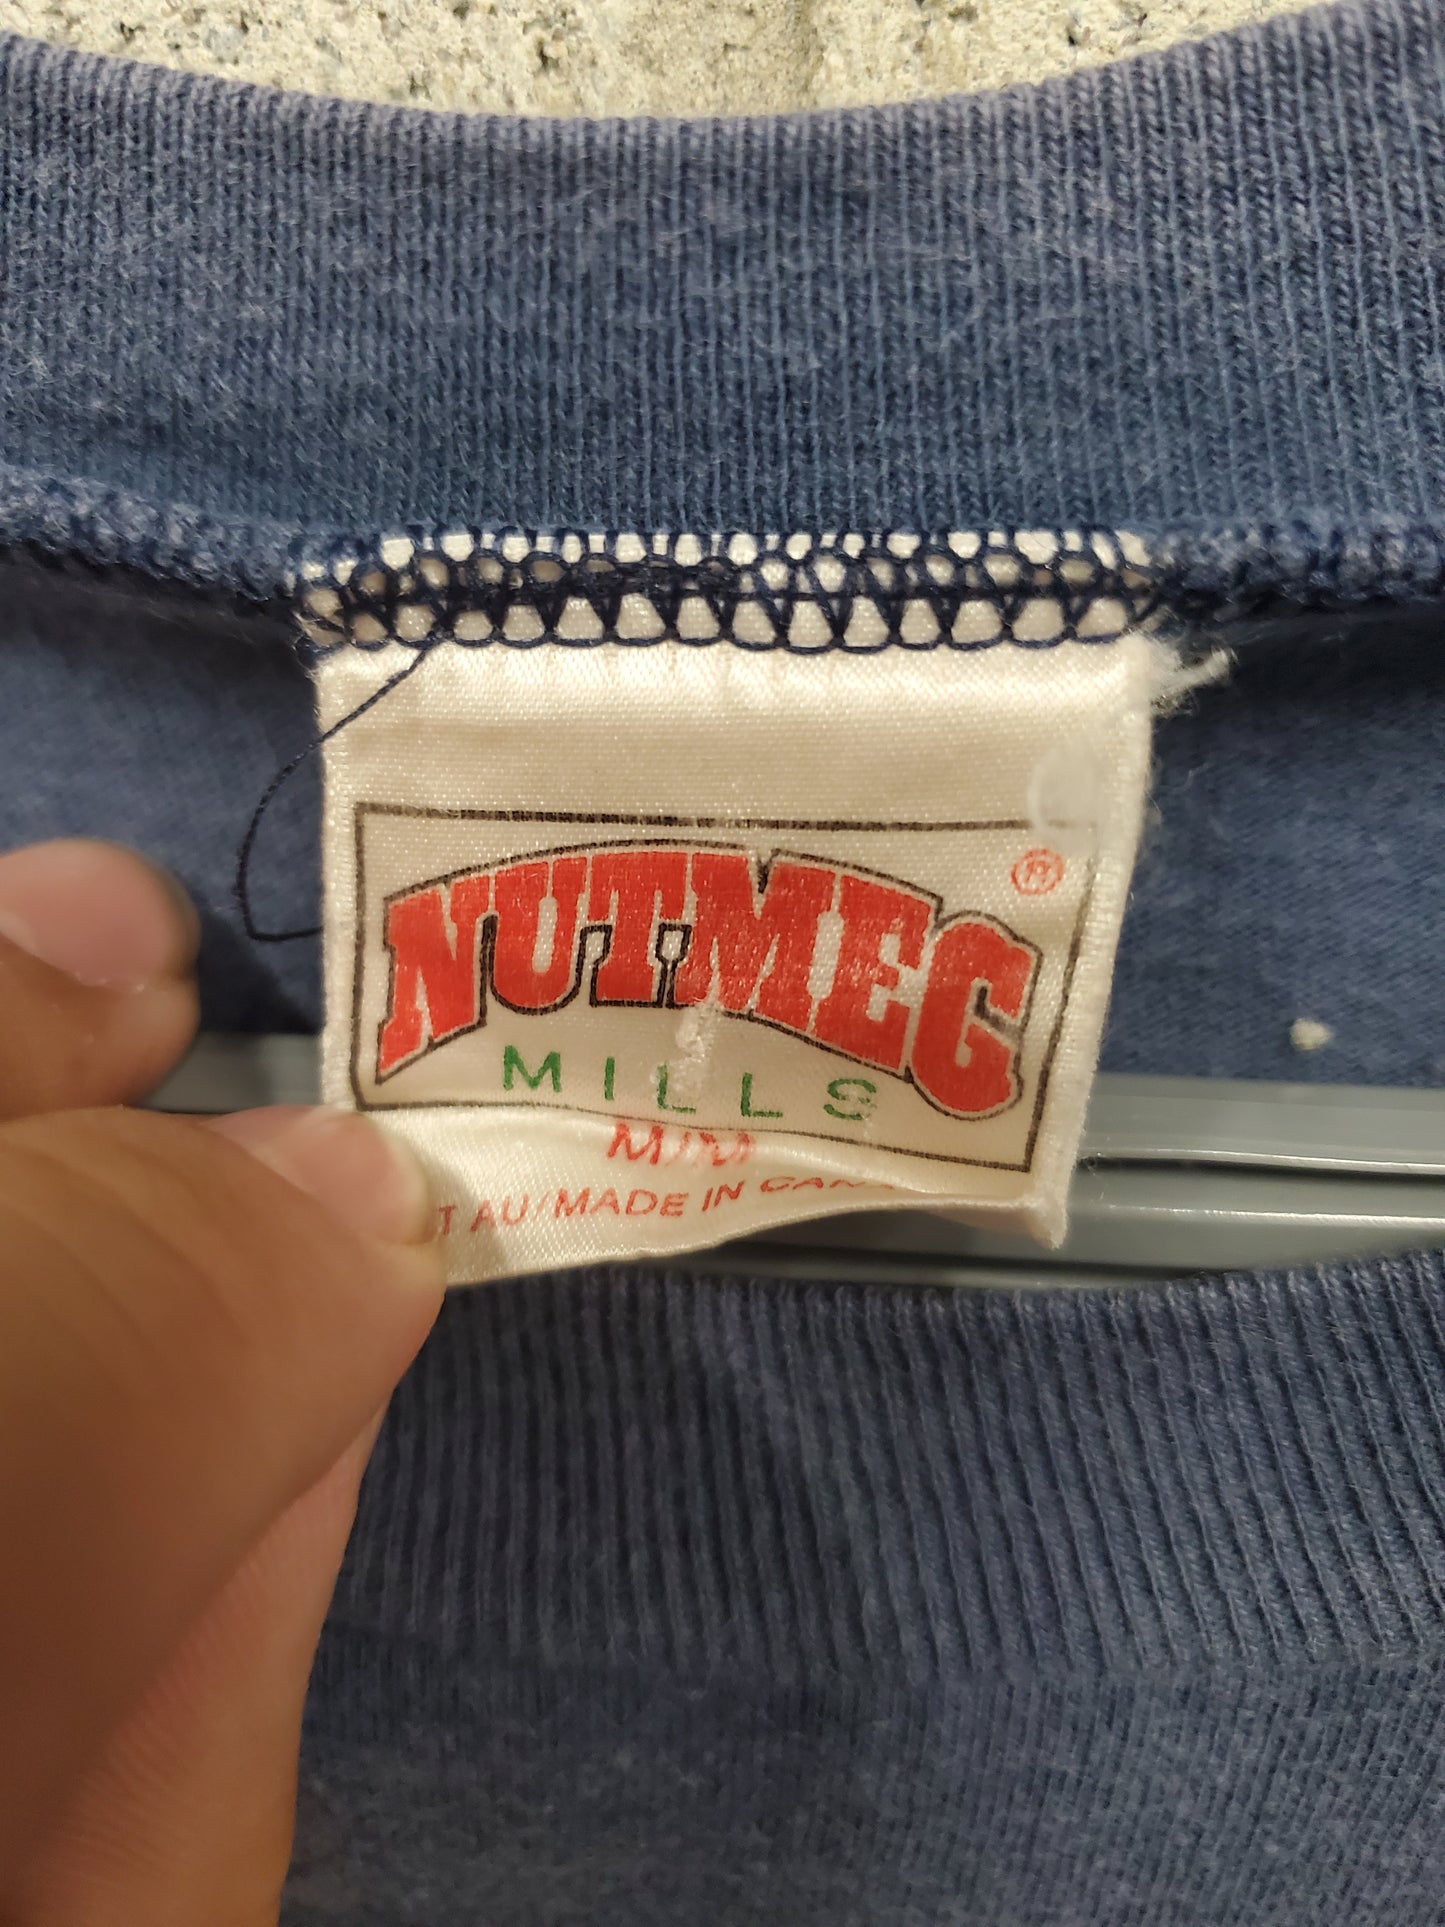 Mens Vintage Georgetown Hoyas Nutmeg T-Shirt Size Medium